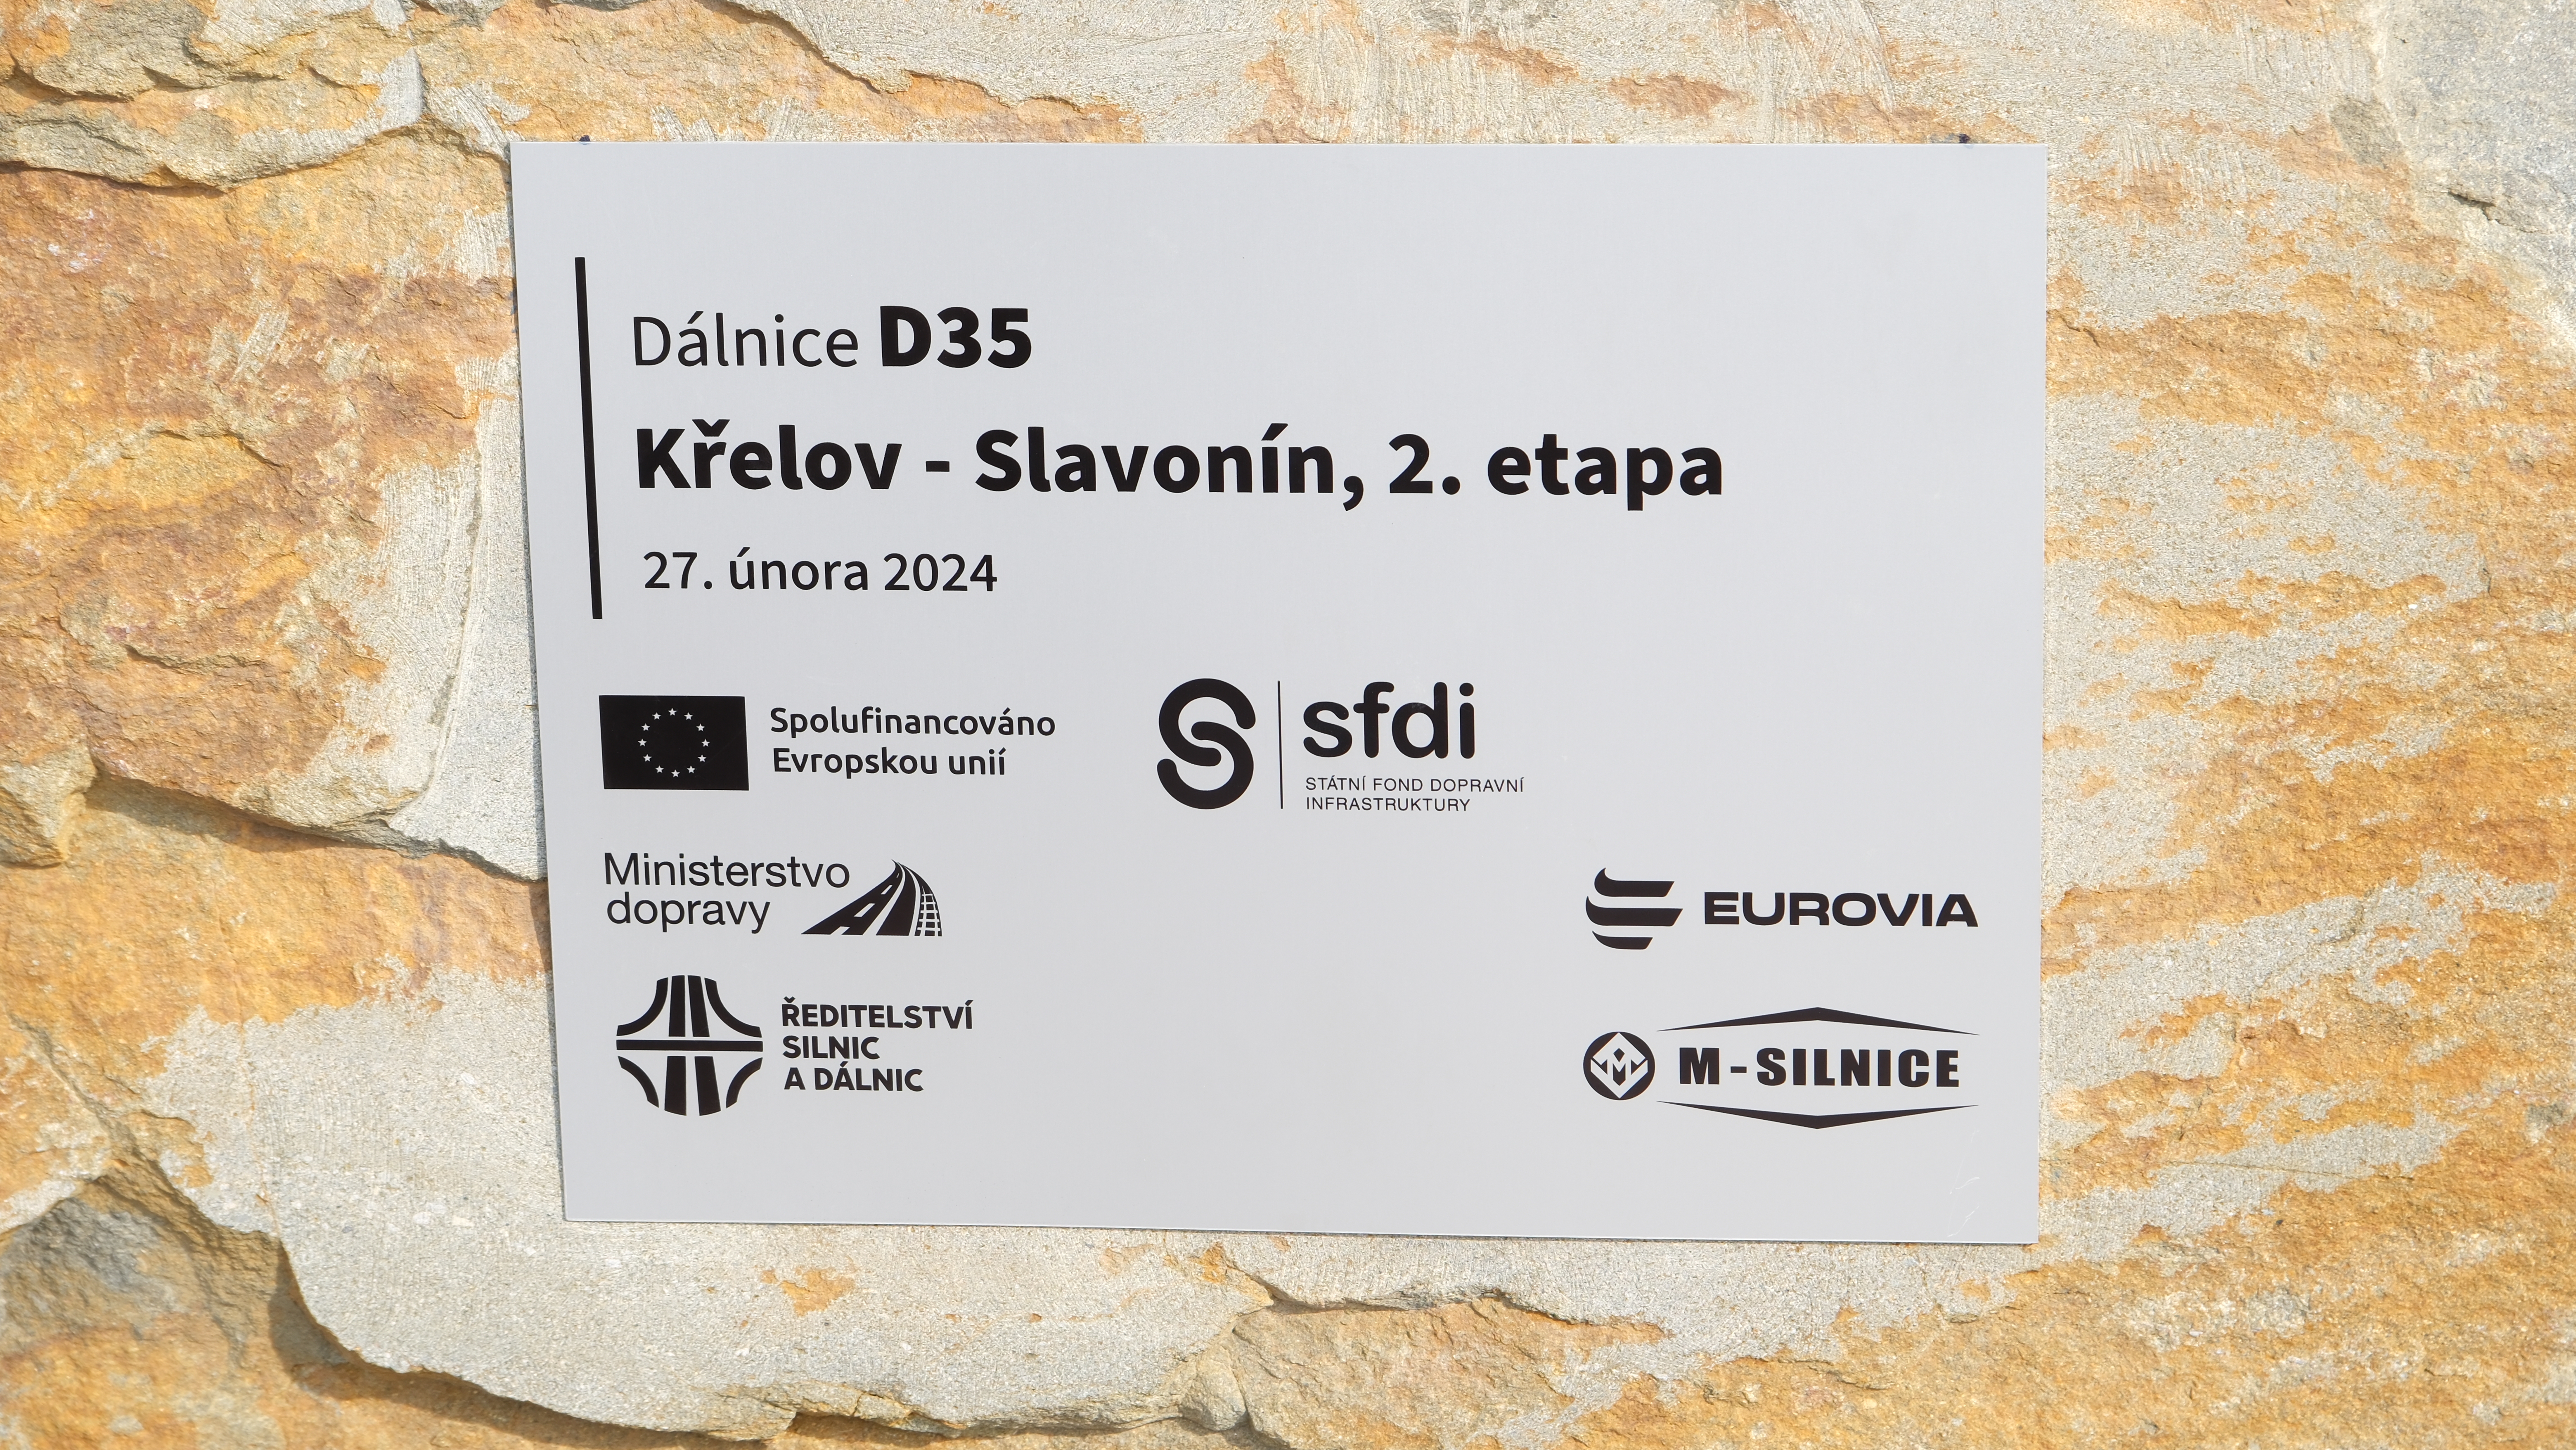 editelstv silnic a dlnic zahajuje stavbu dlnice D35 KelovSlavonn